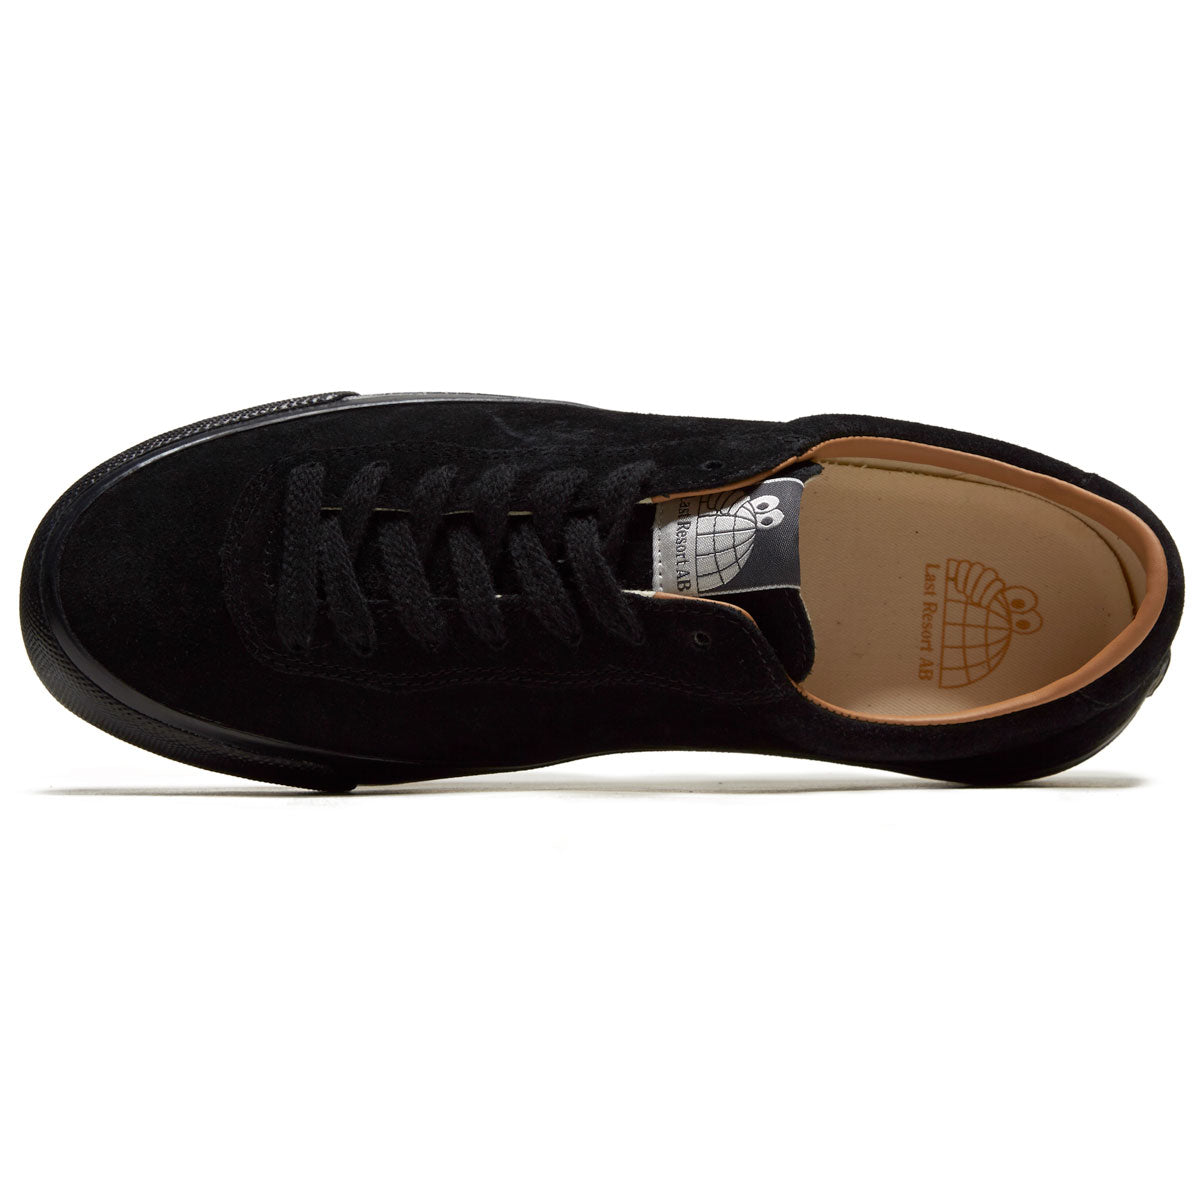 Last Resort AB VM001 Suede Lo Shoes - 3 x Black/Black image 3